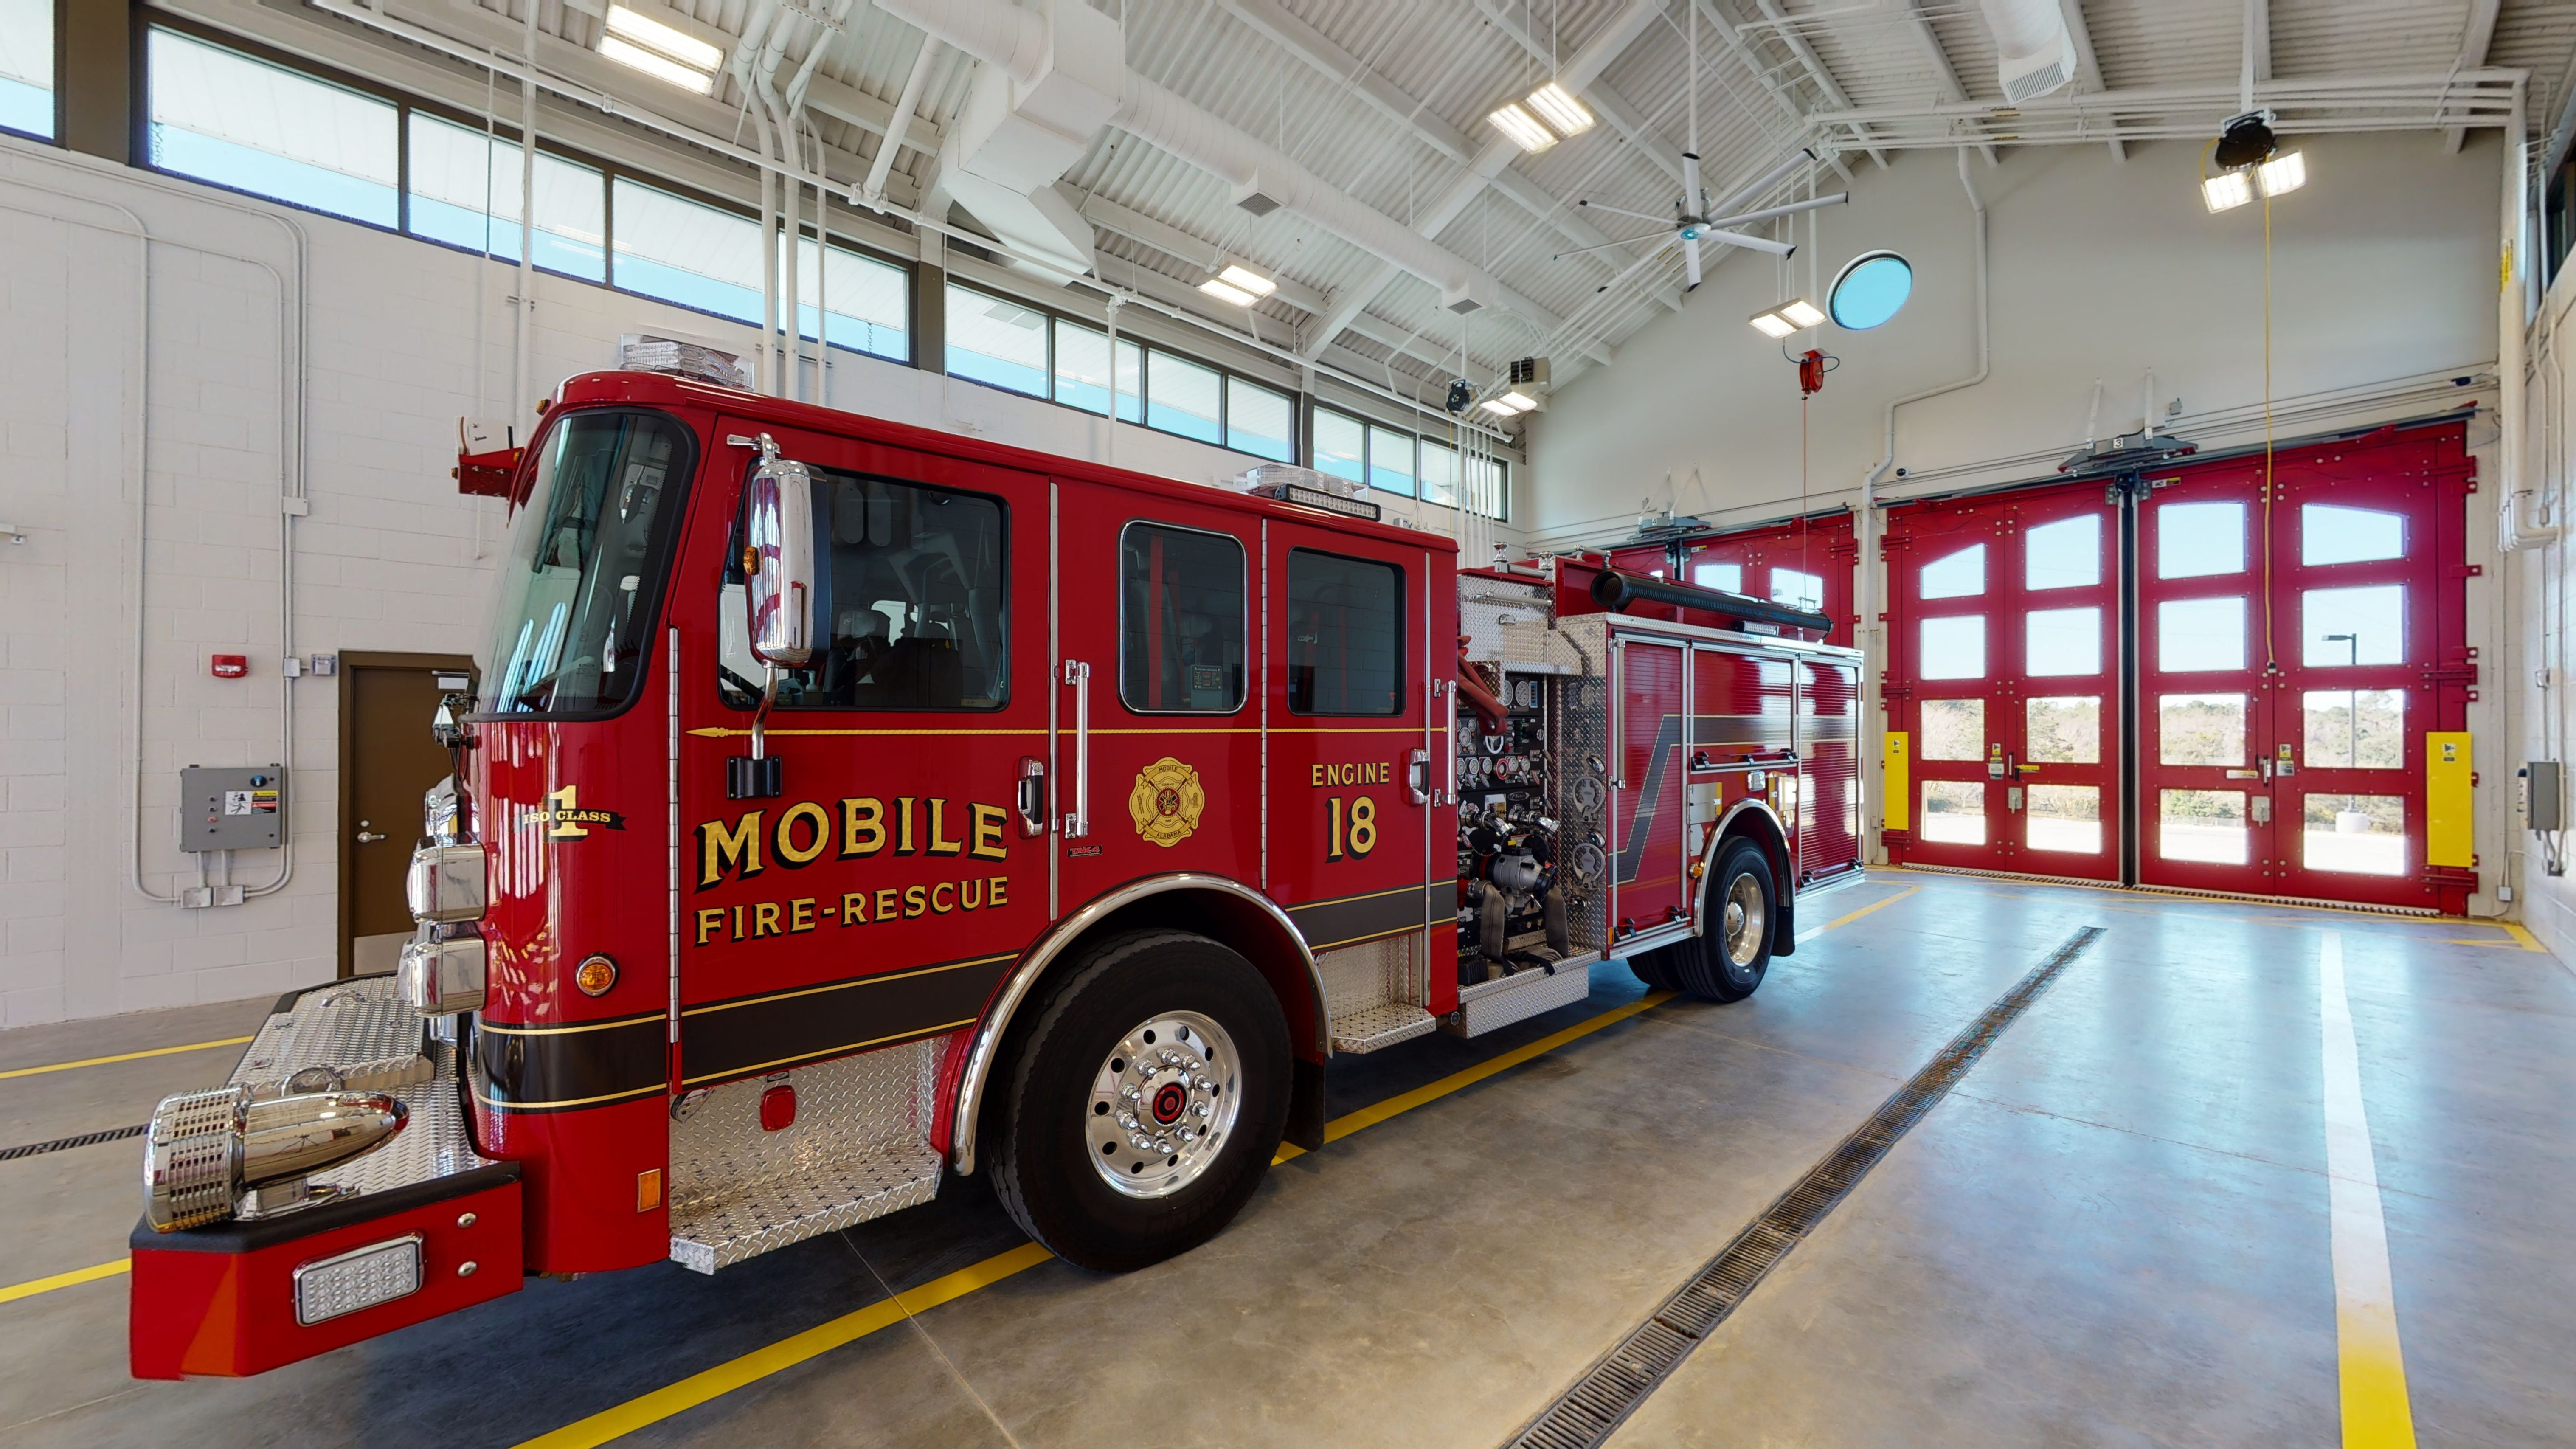 Mobile-Fire-Rescue-Engine-18-06182021_140707